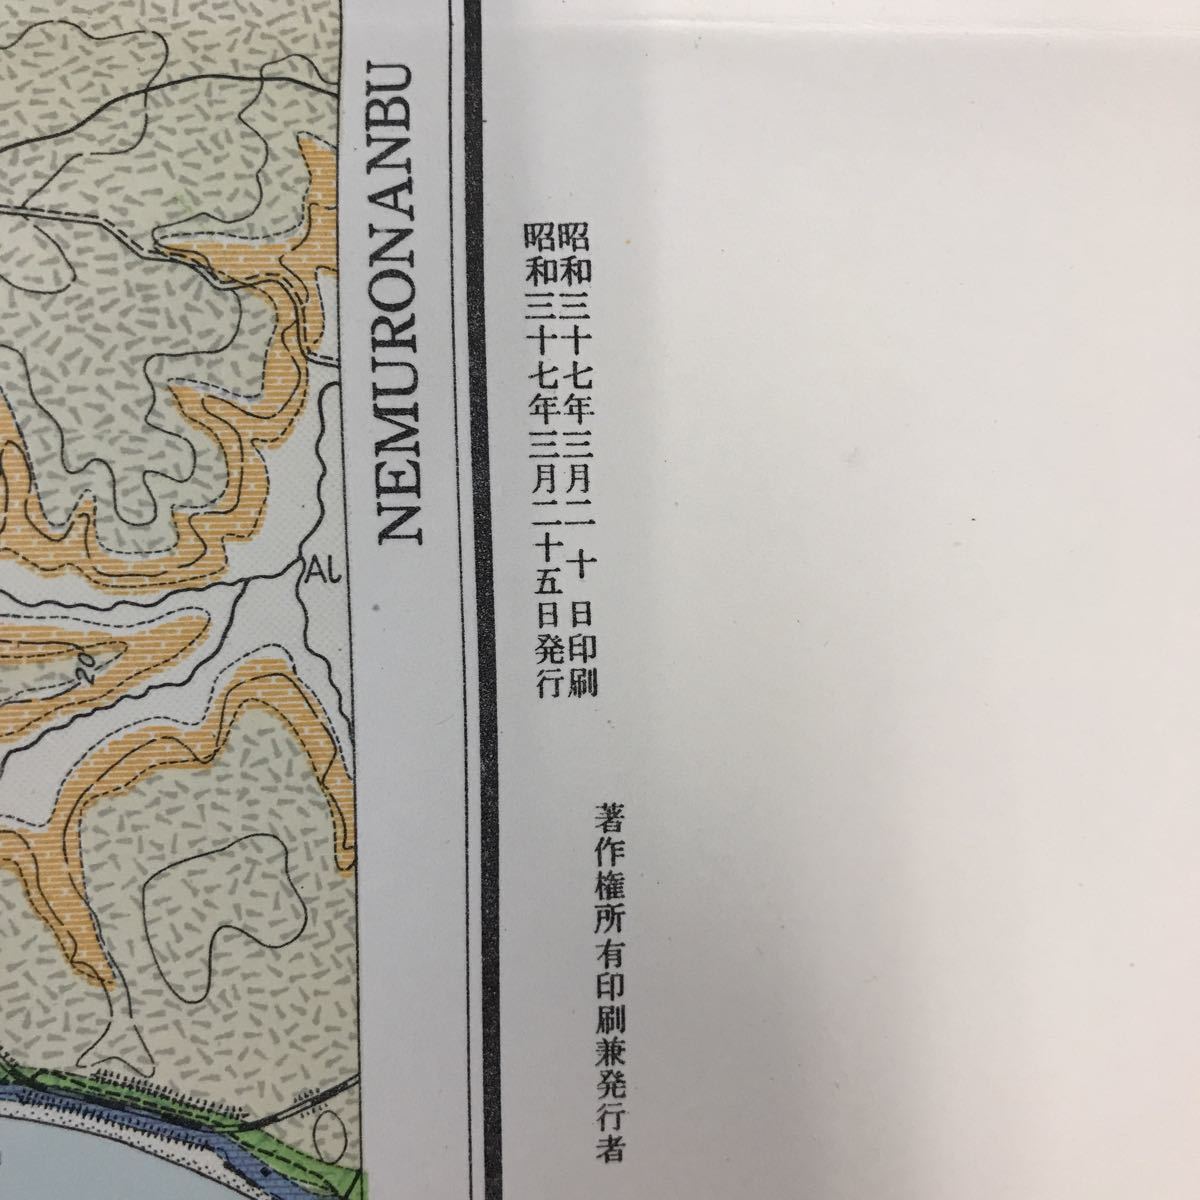 A60-173 5万分の1地質図幅説明書 厚床および落石岬（釧路一第26,39号）北海道立地下資源調査所 昭和 37年_画像7